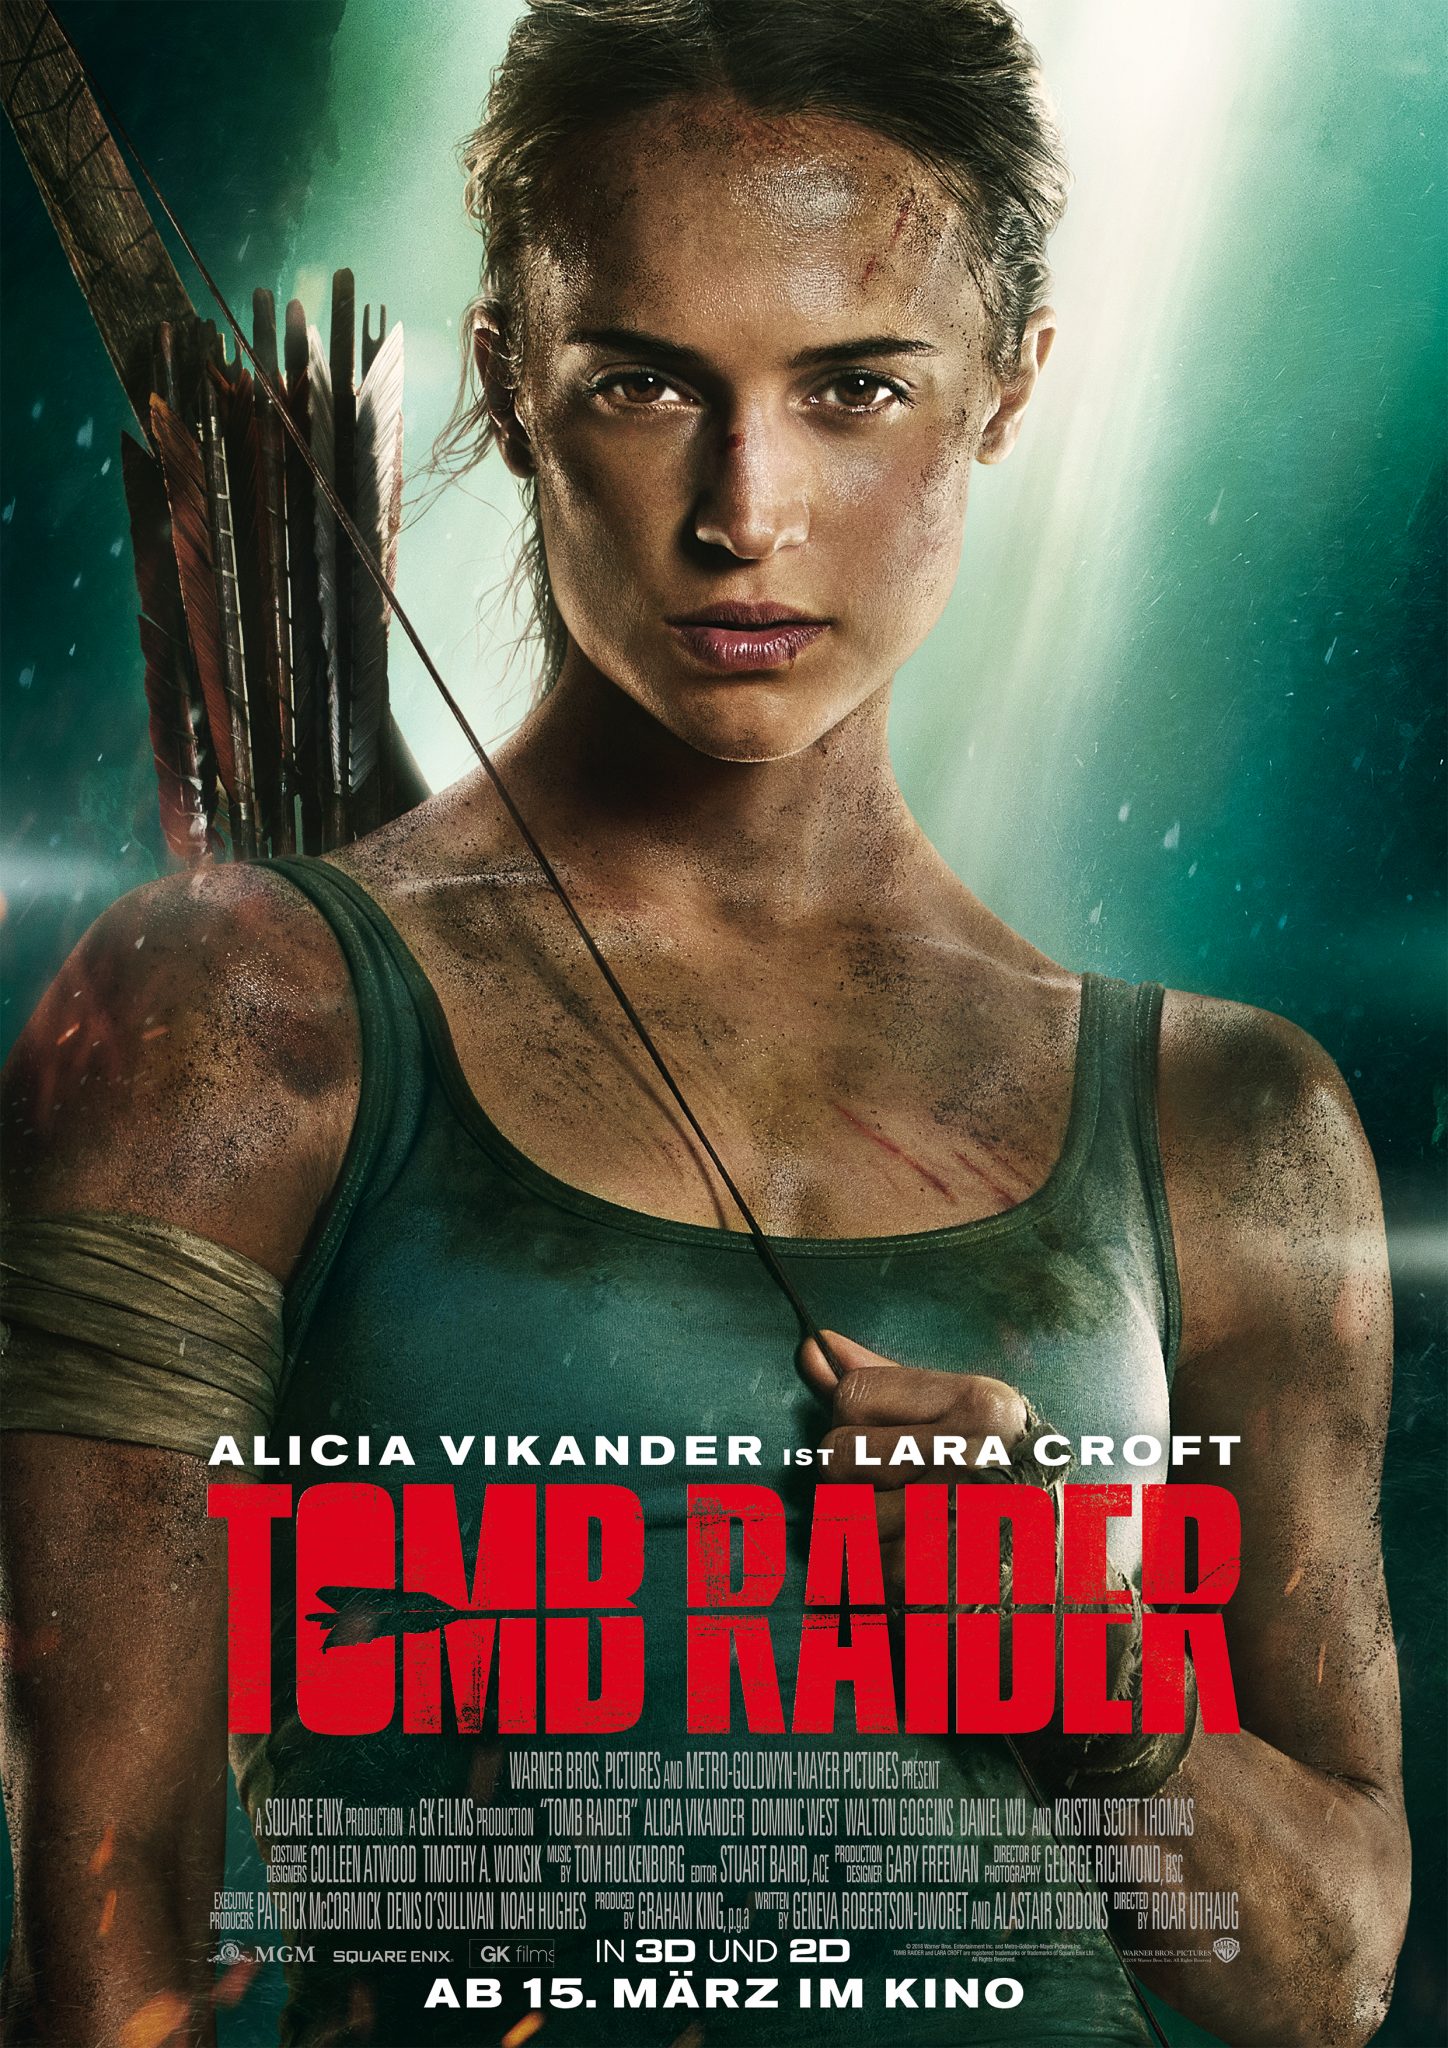 Filmplakat von "Tomb Raider" ©2018 Warner Bros. Entertainment Inc and Metro-Goldwyn-Mayer Pictures Inc.